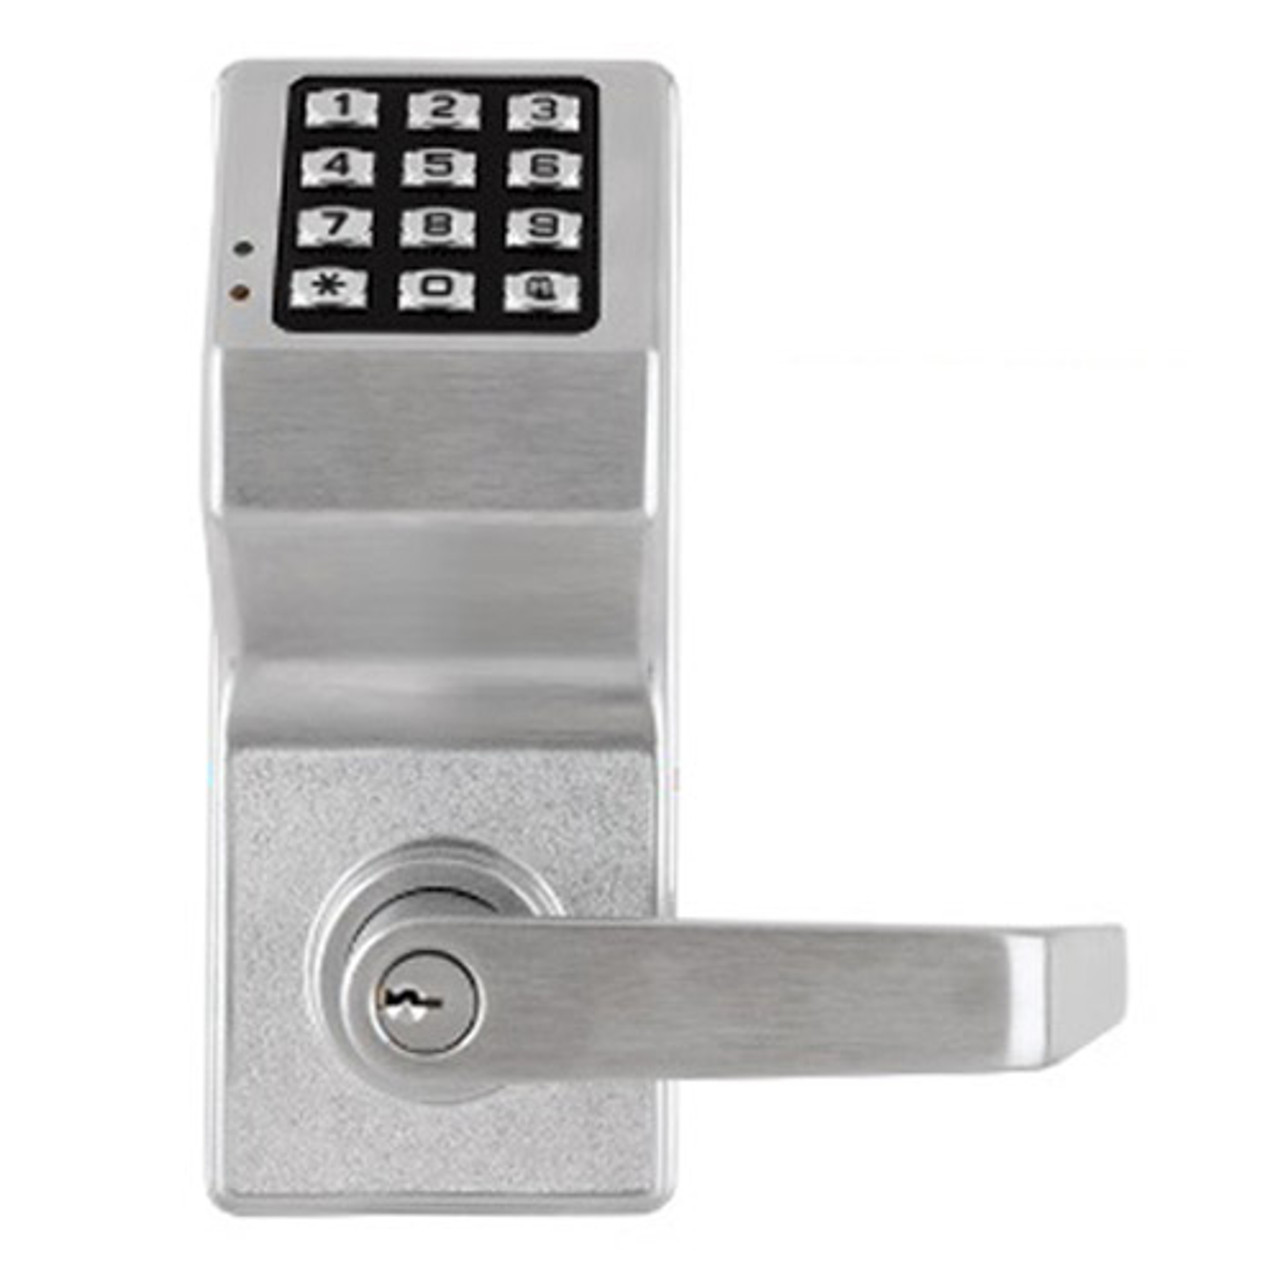 DL4100IC-R-US26D Alarm Lock Trilogy Electronic Digital Lock in Satin Chrome Finish